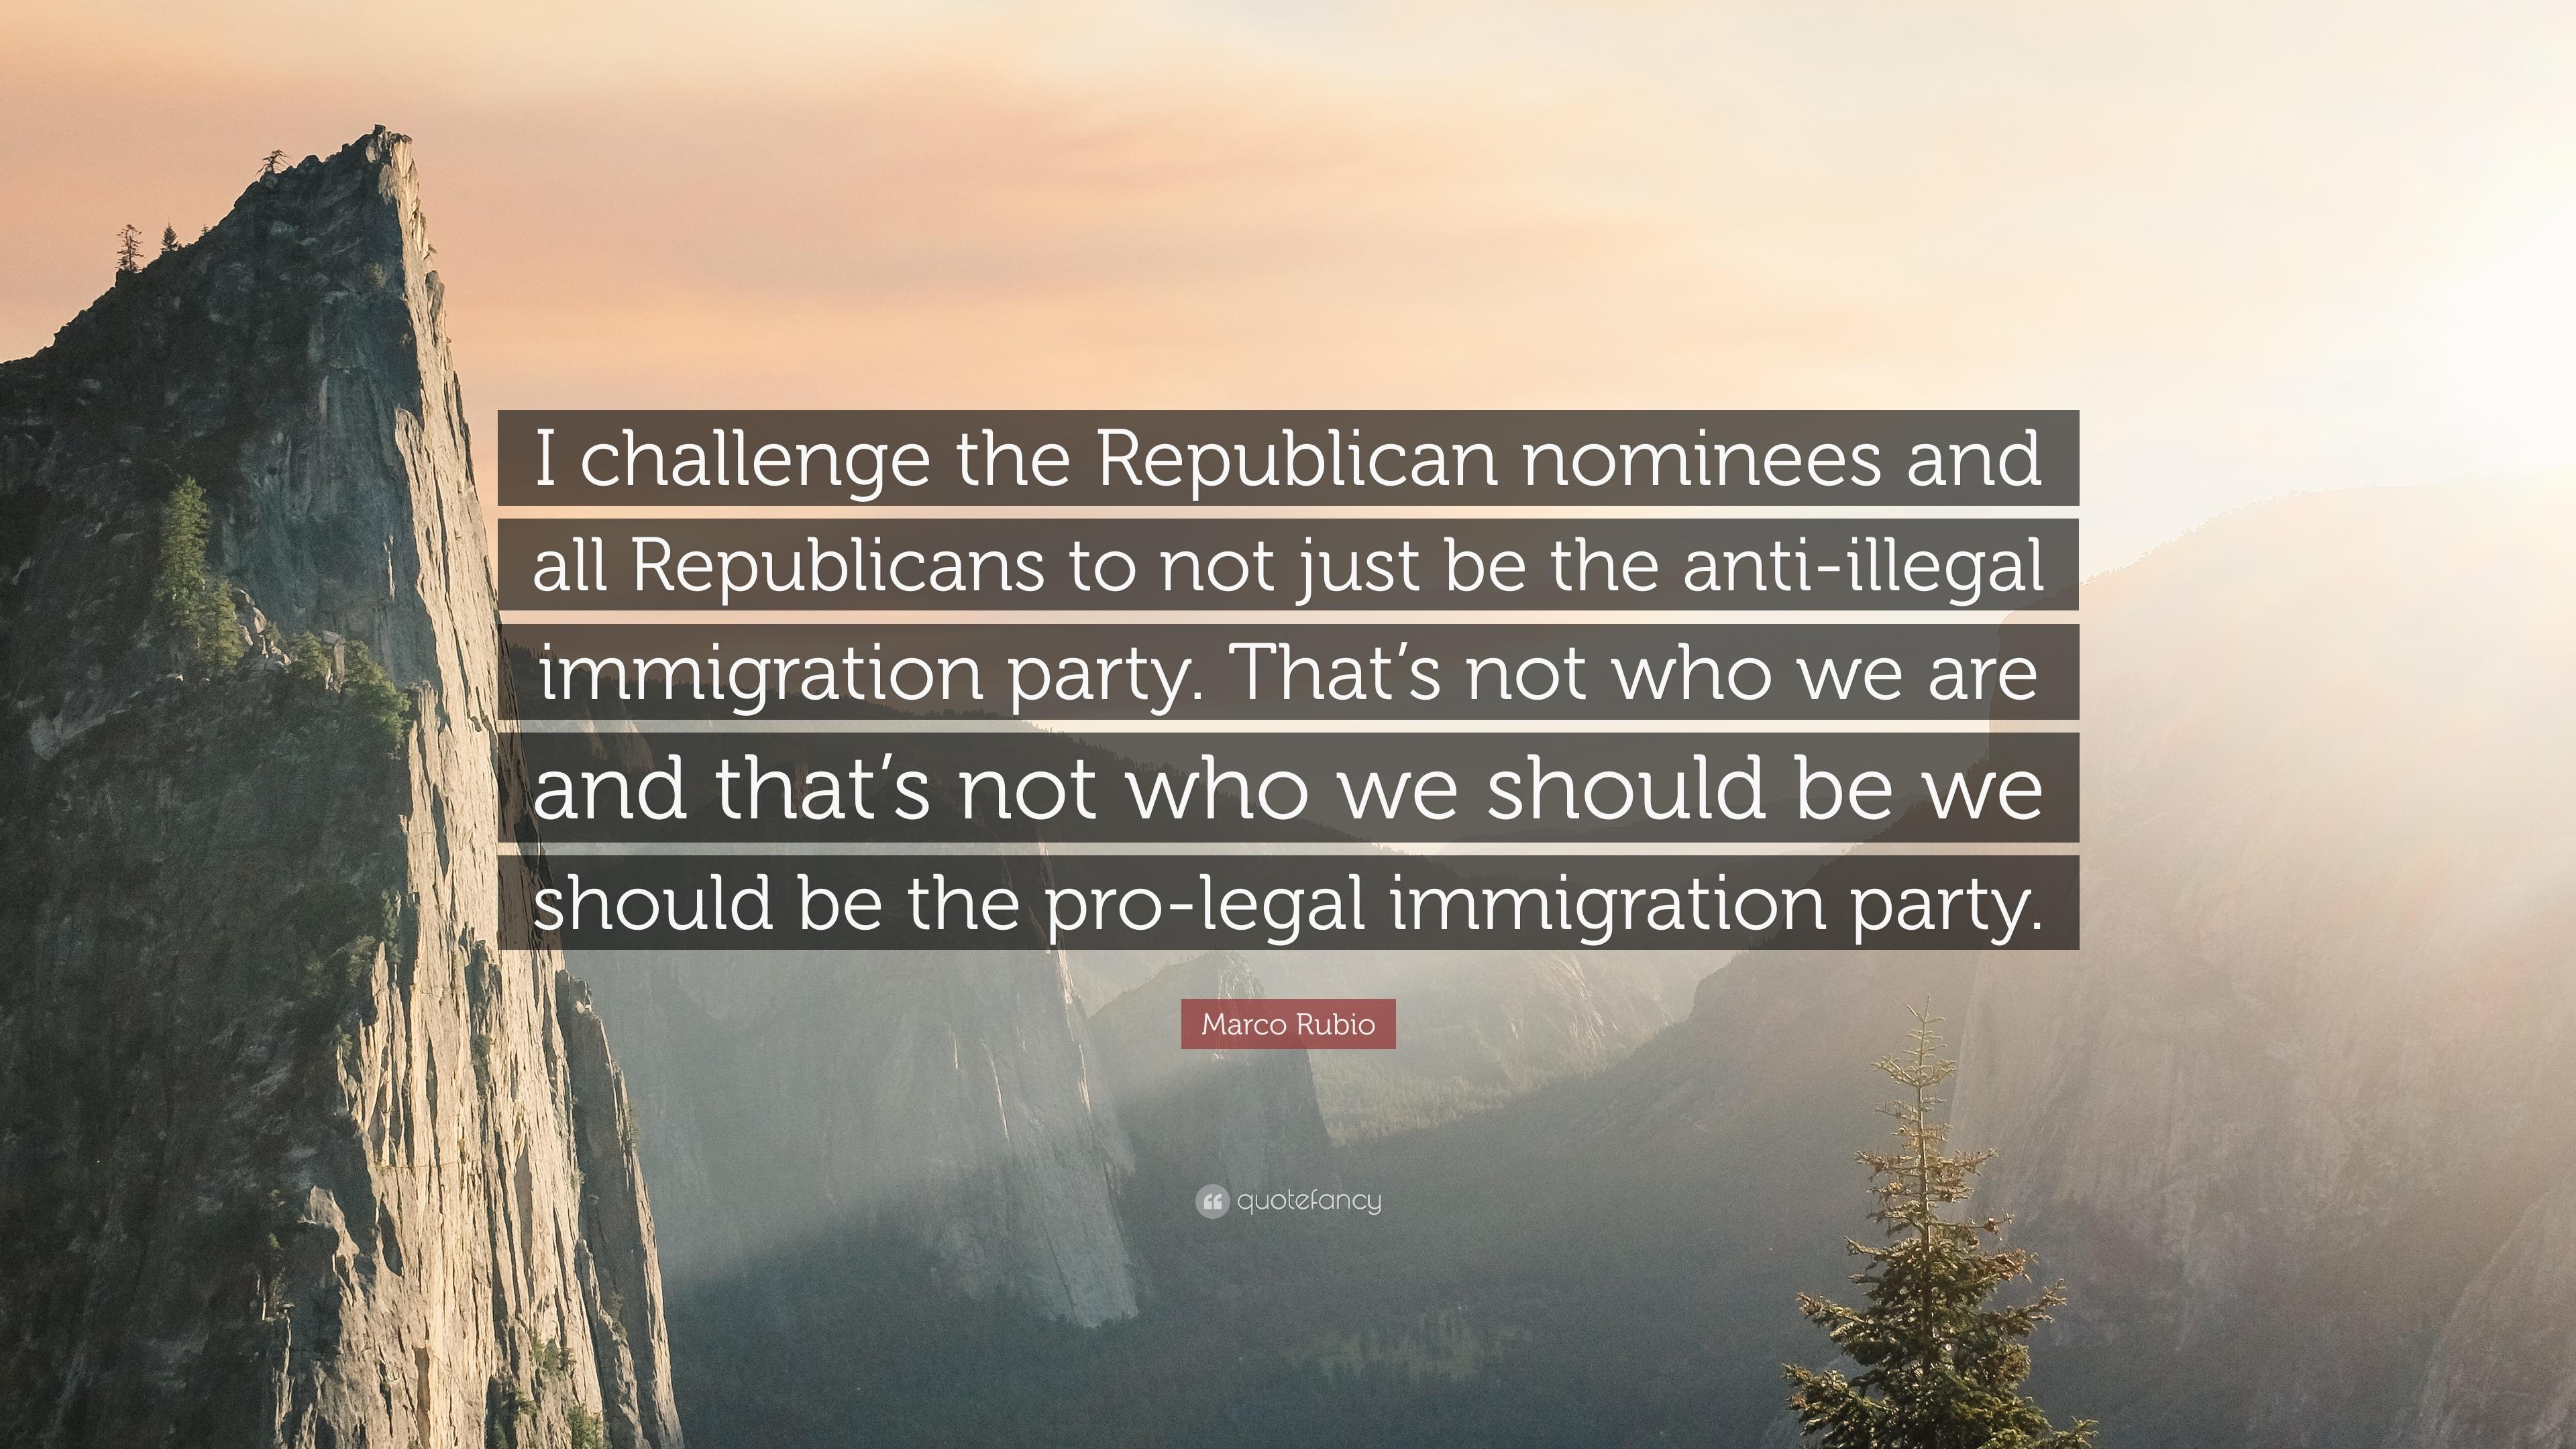 Marco Rubio Quote: “I challenge the Republican nominees